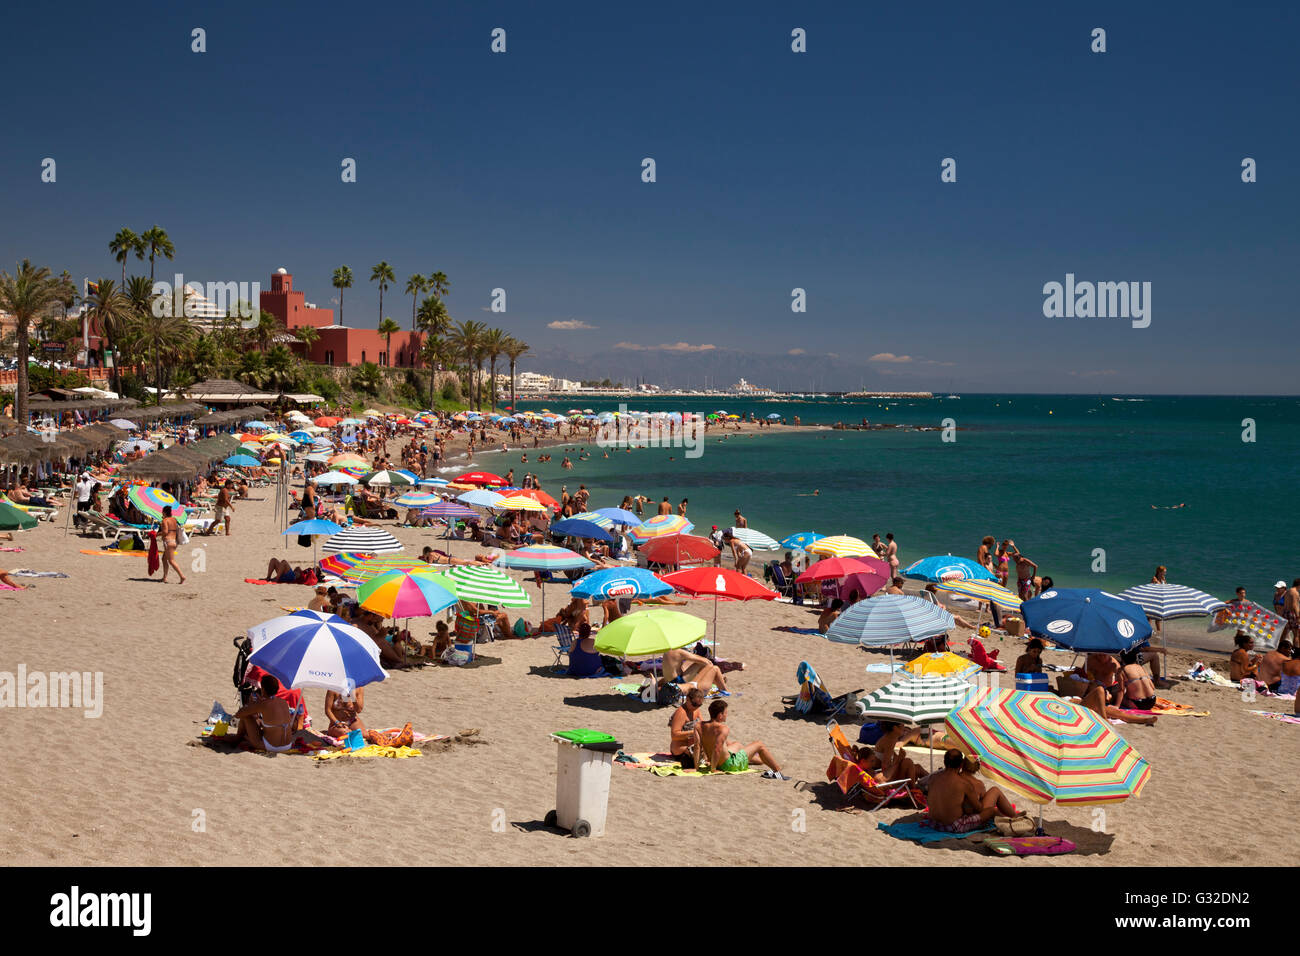 The busy Playa de Santa Ana beach and Castillo El Bil-Bil castle, Benalmadena, Malaga province, Costa del Sol, Andalusia, Spain Stock Photo